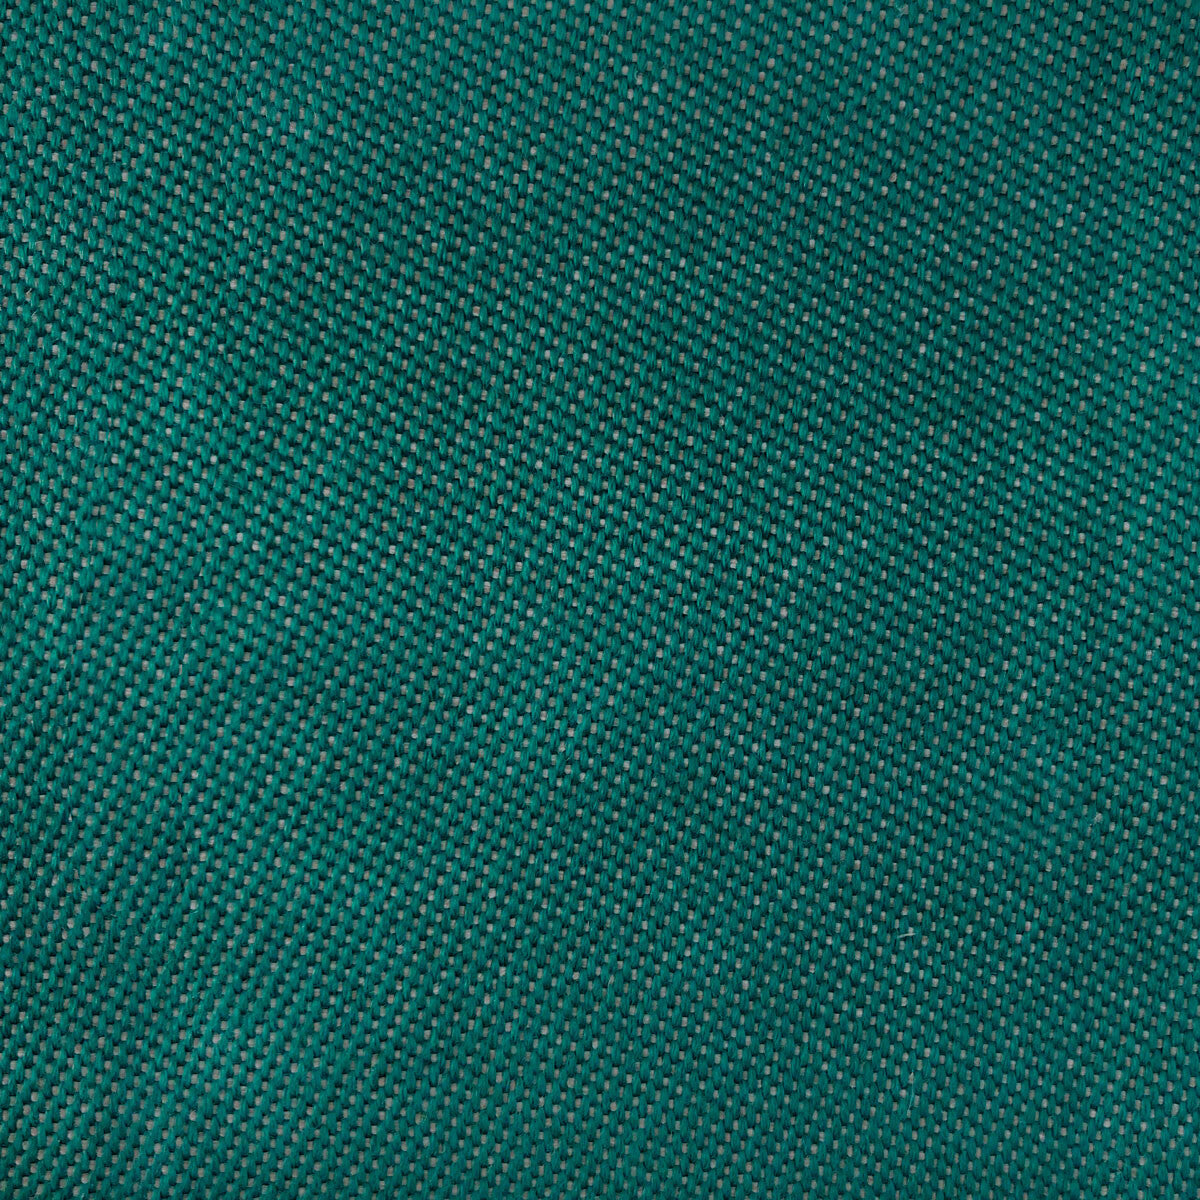 Max fabric in azul color - pattern LCT1067.007.0 - by Gaston y Daniela in the Lorenzo Castillo VI collection